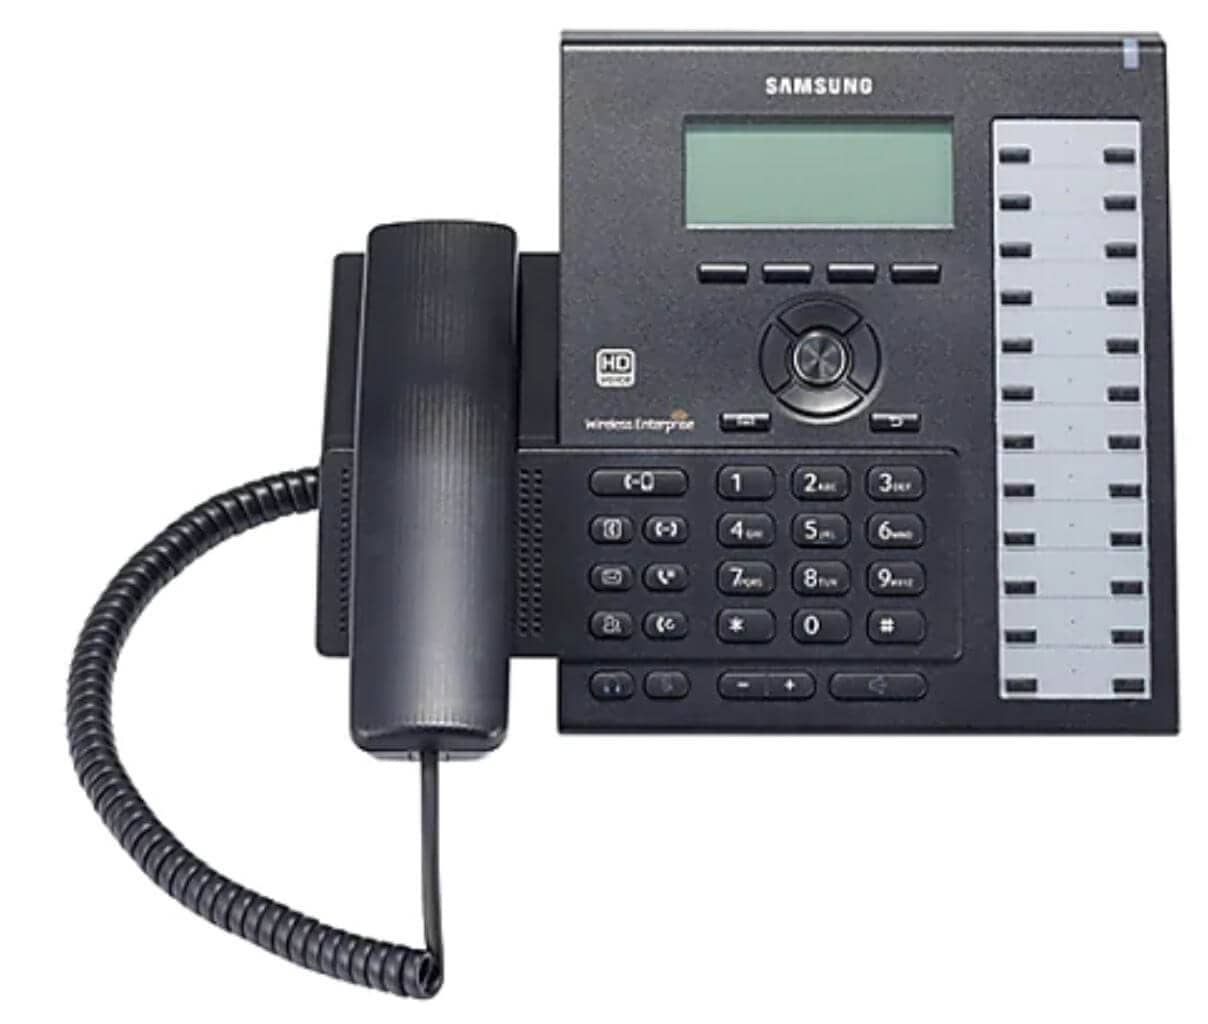 Samsung SMT-i6020 IP Phone Image